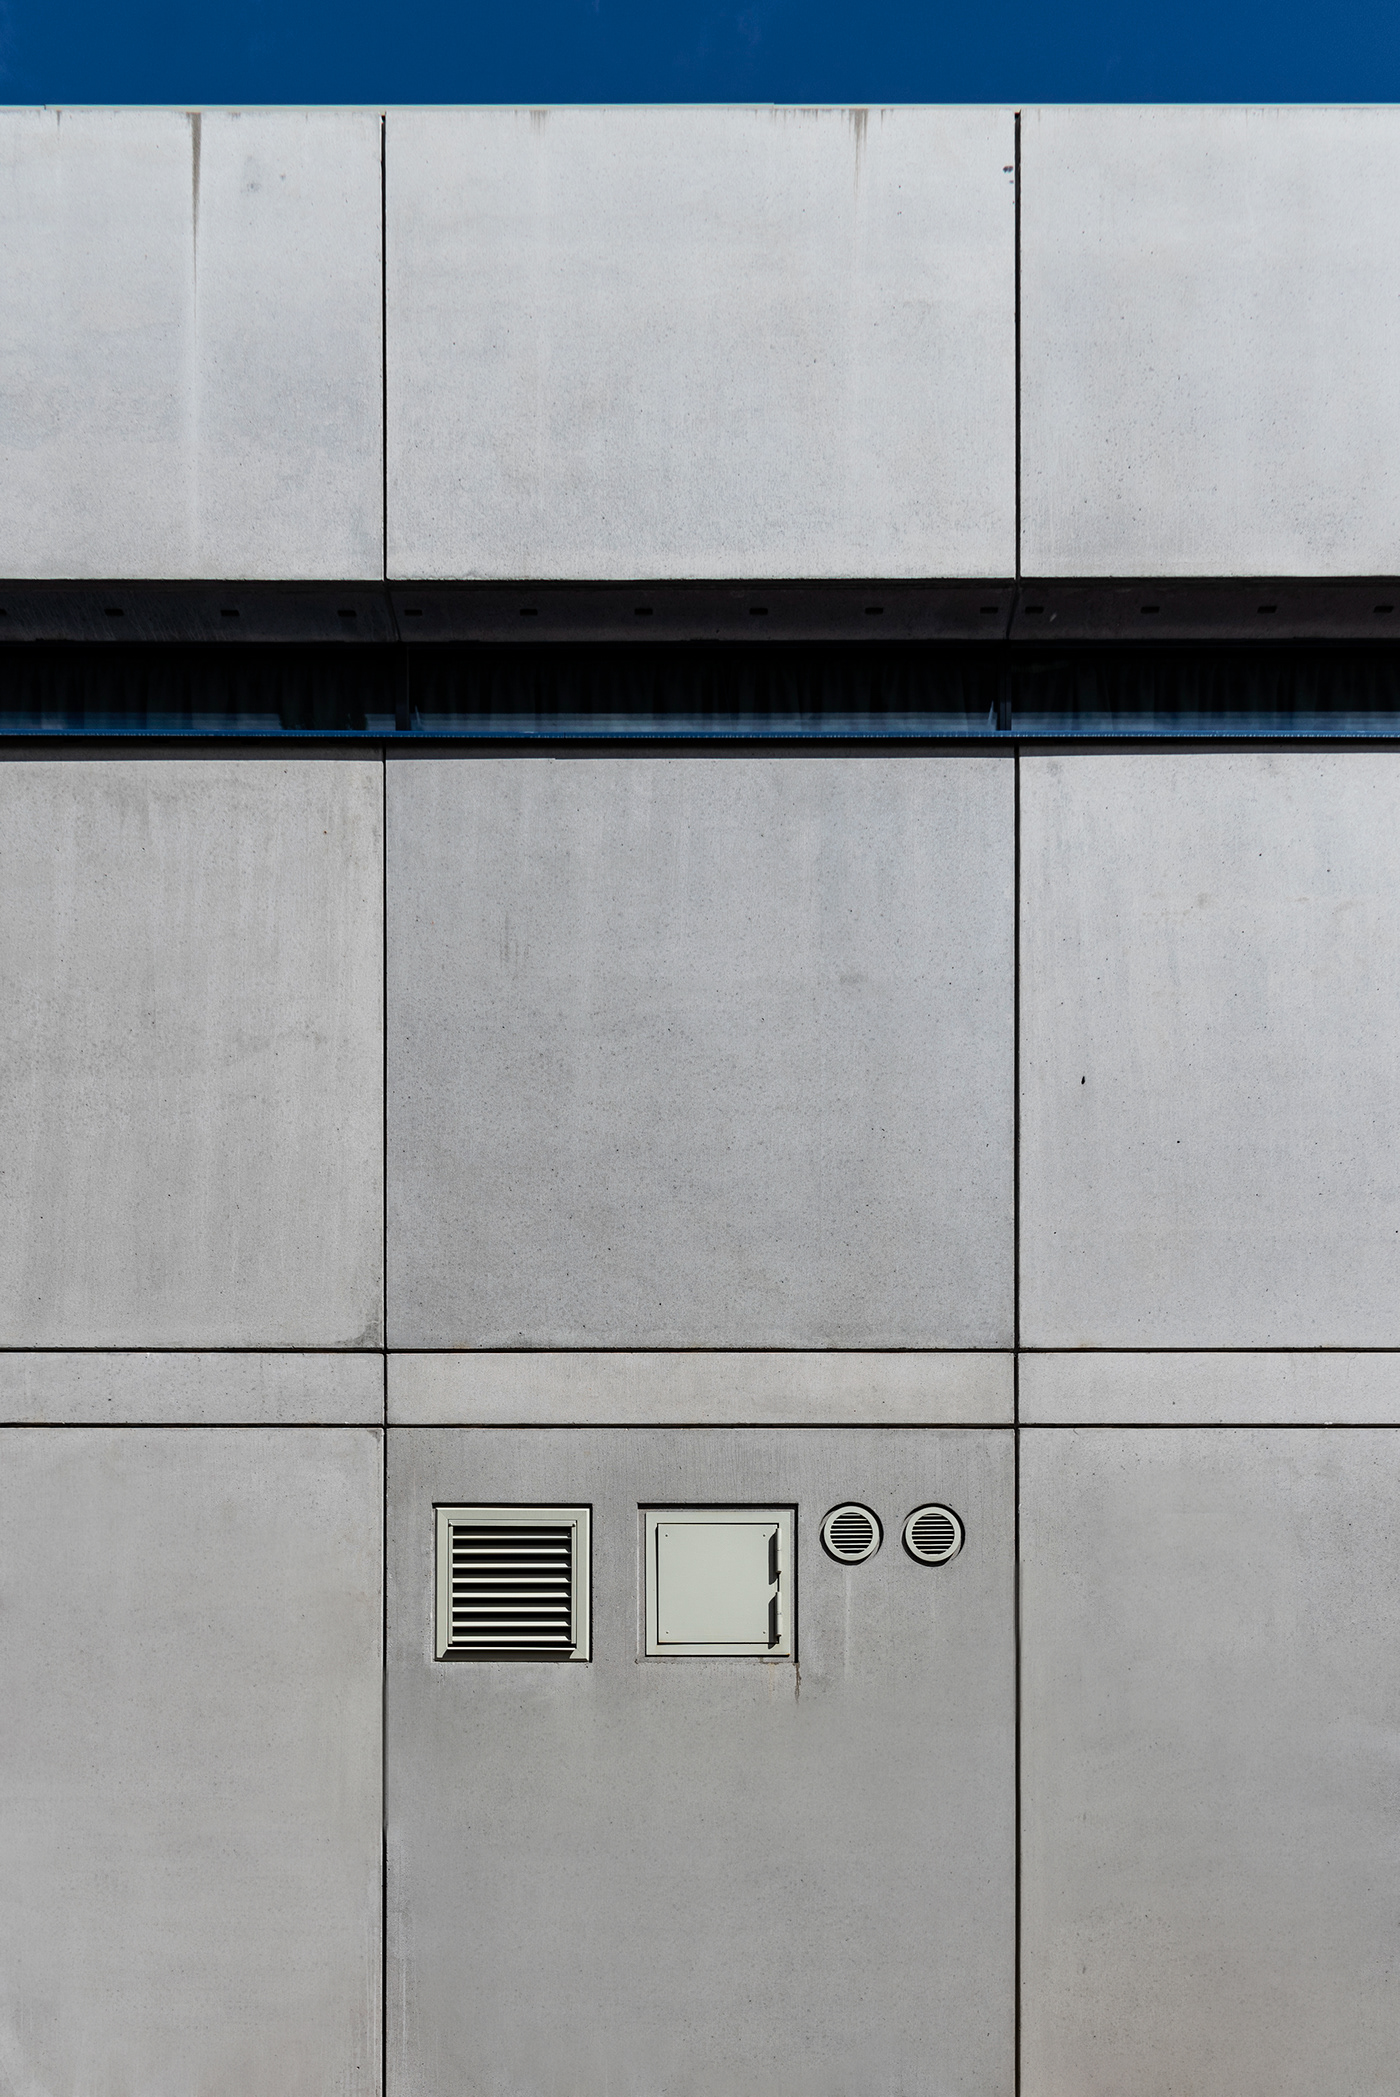 ArchDaily architecturalphotographer architecture archphoto beton concrete finland